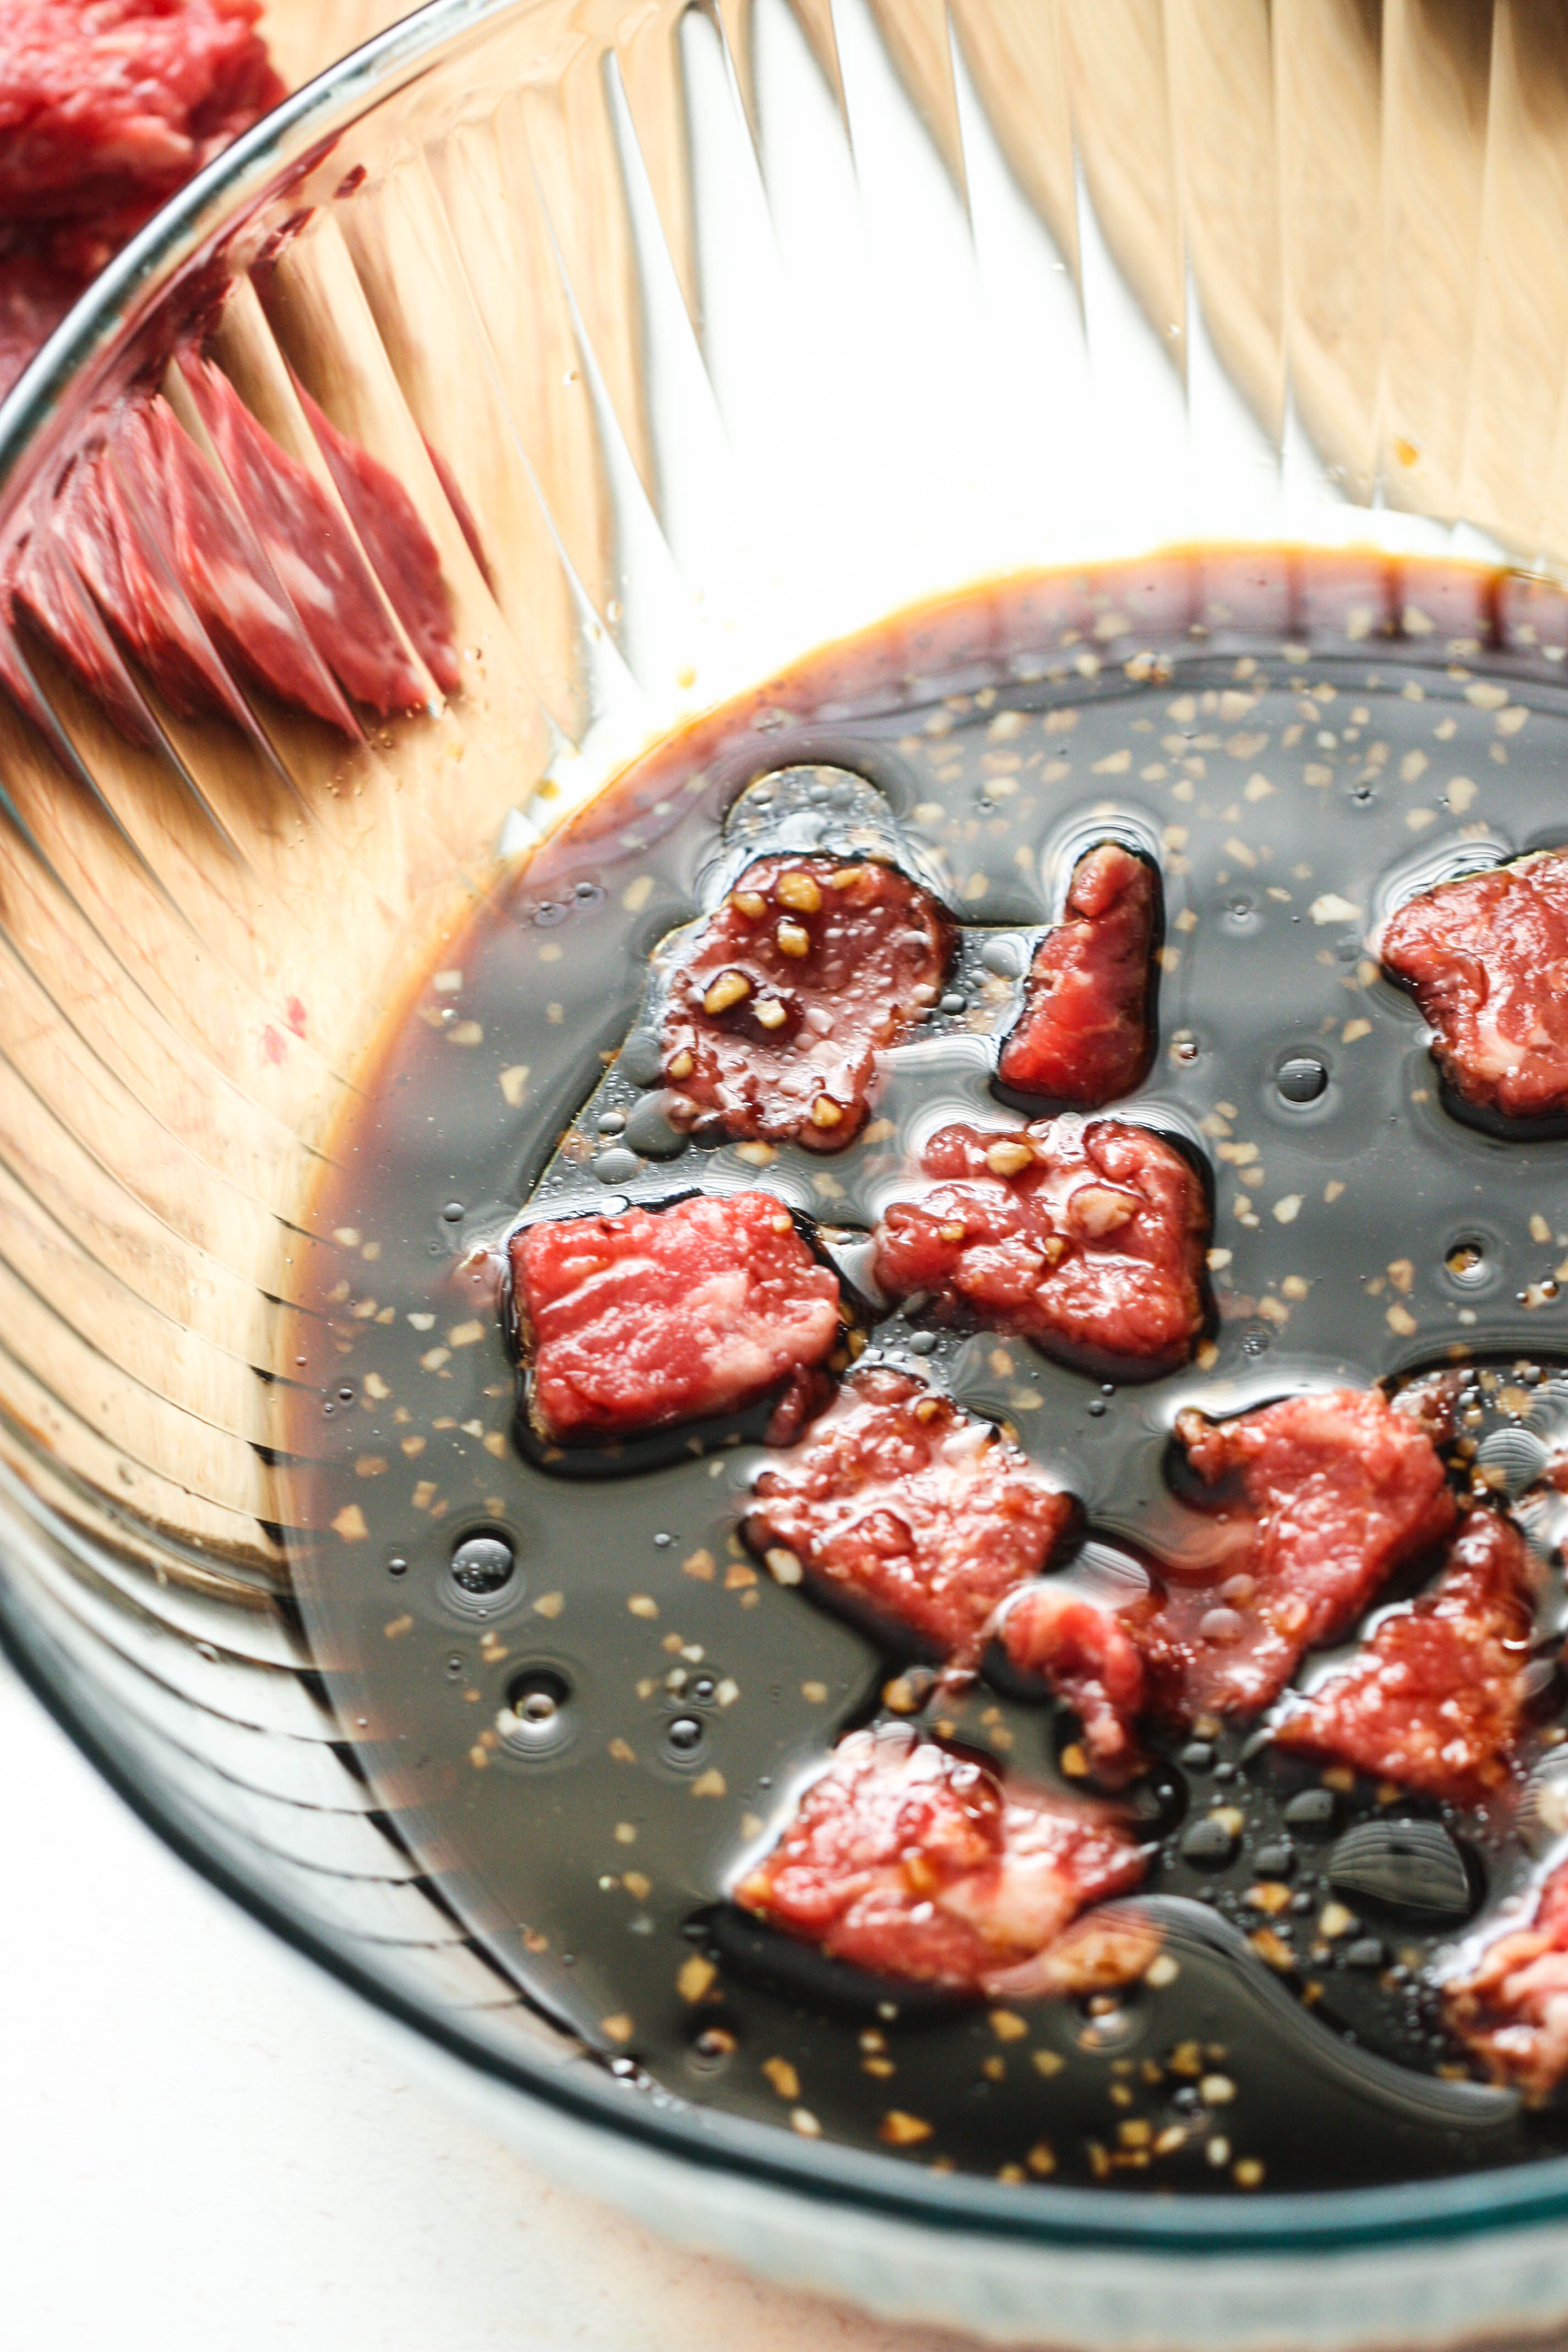 Steak in the sesame asian marinade